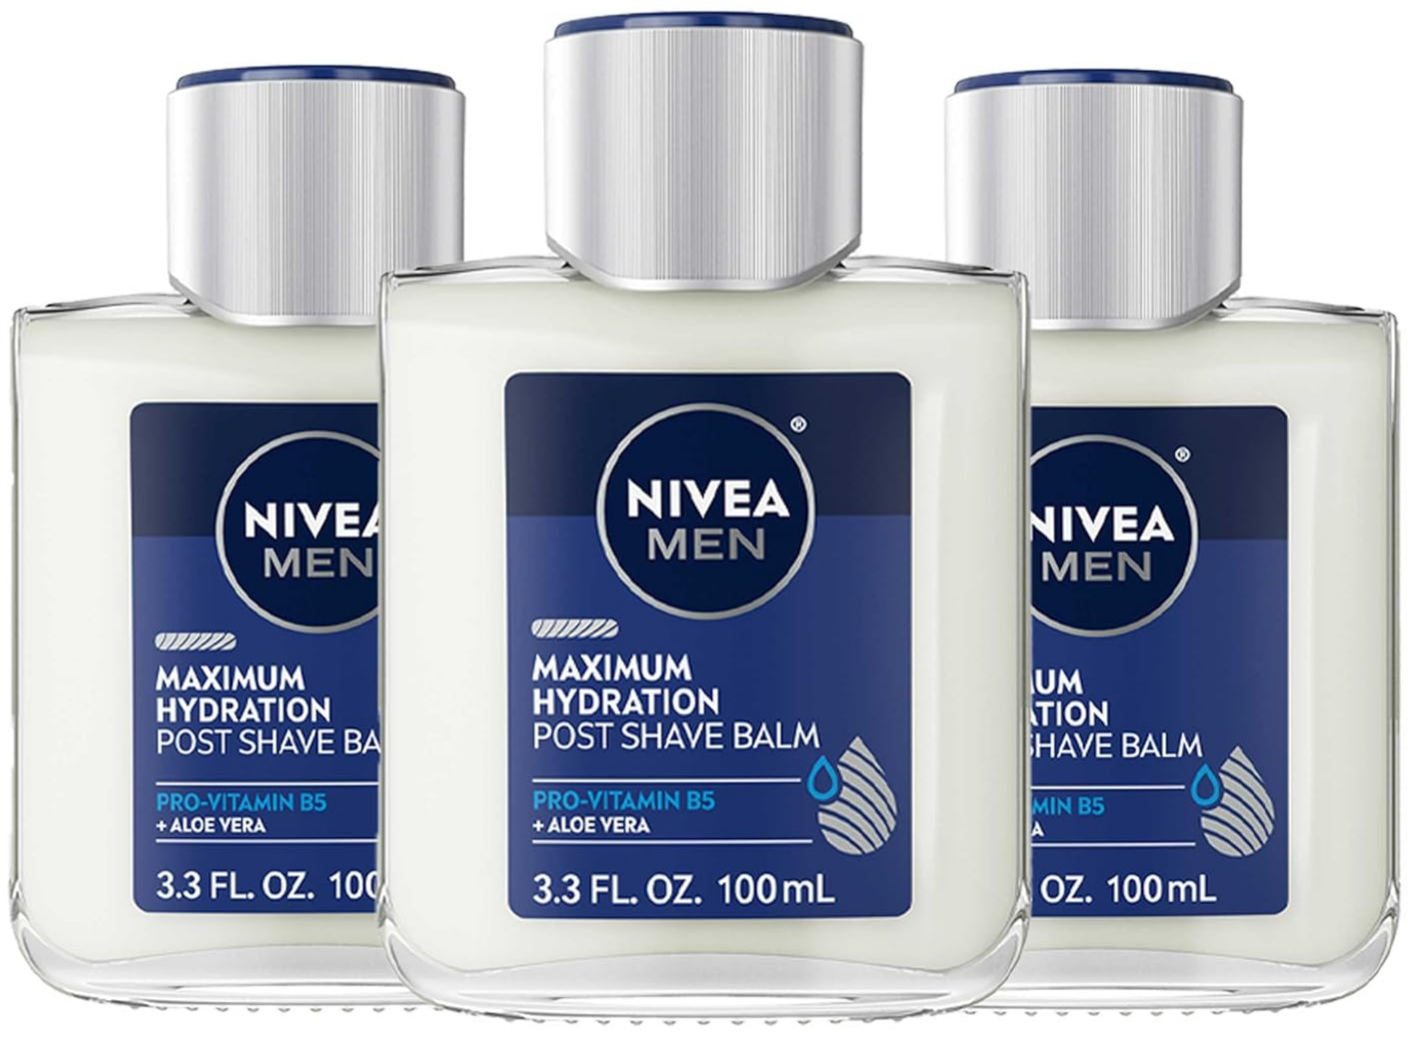 $15.38 w/ S&S: Nivea Men Maximum Hydration Post Shave Balm with Aloe Vera and Provitamin B5, 3 Pack of 3.3 Fl Oz Bottles